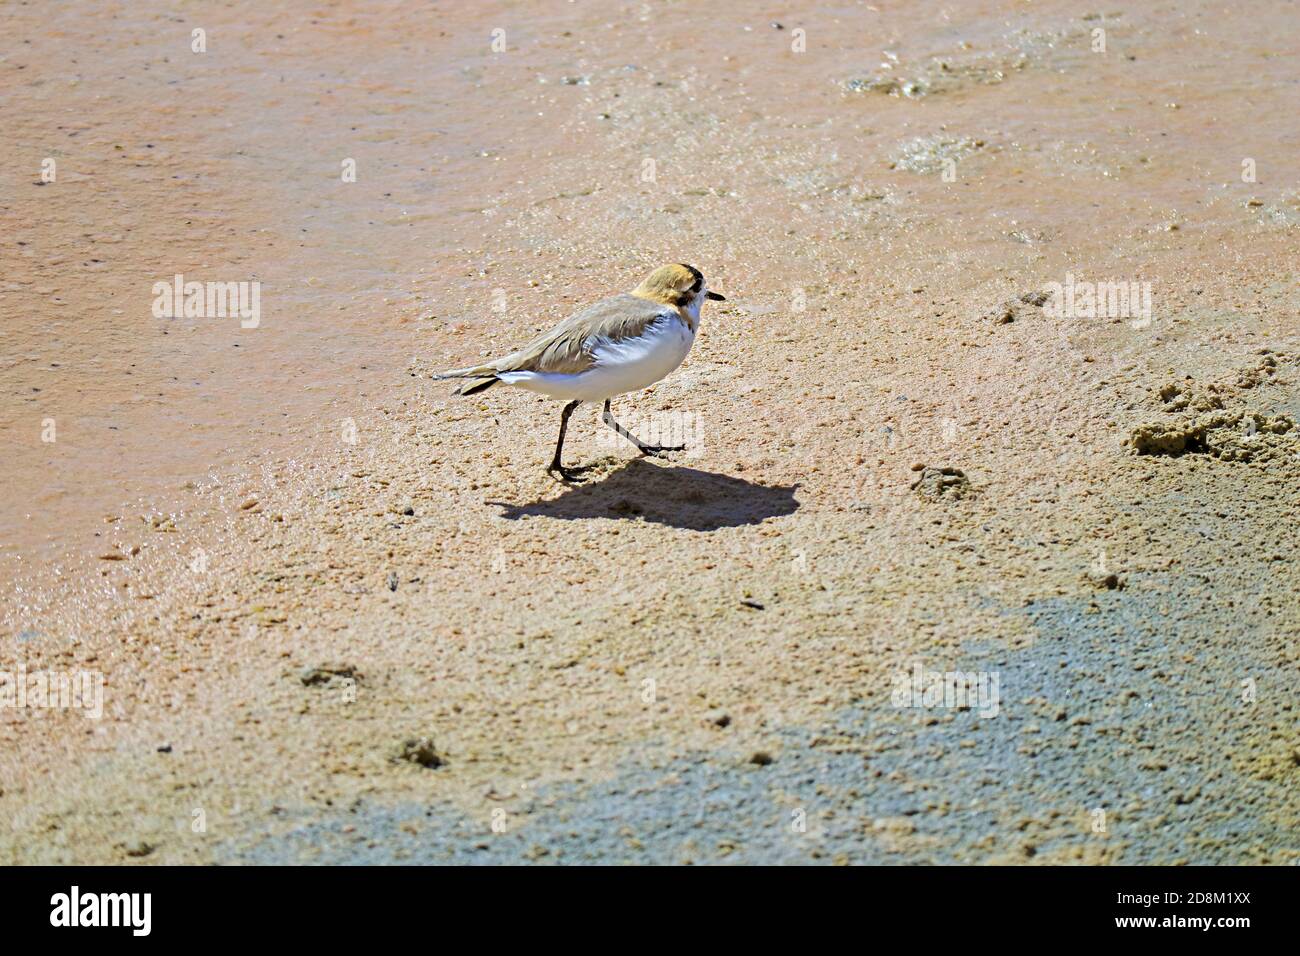 Puna Plover Bird Walking Alone on the Shore of Chaxa Lagoon, Part of Salar de Atacama Salt Flat in Antofagasta Region, Northern Chile Stock Photo